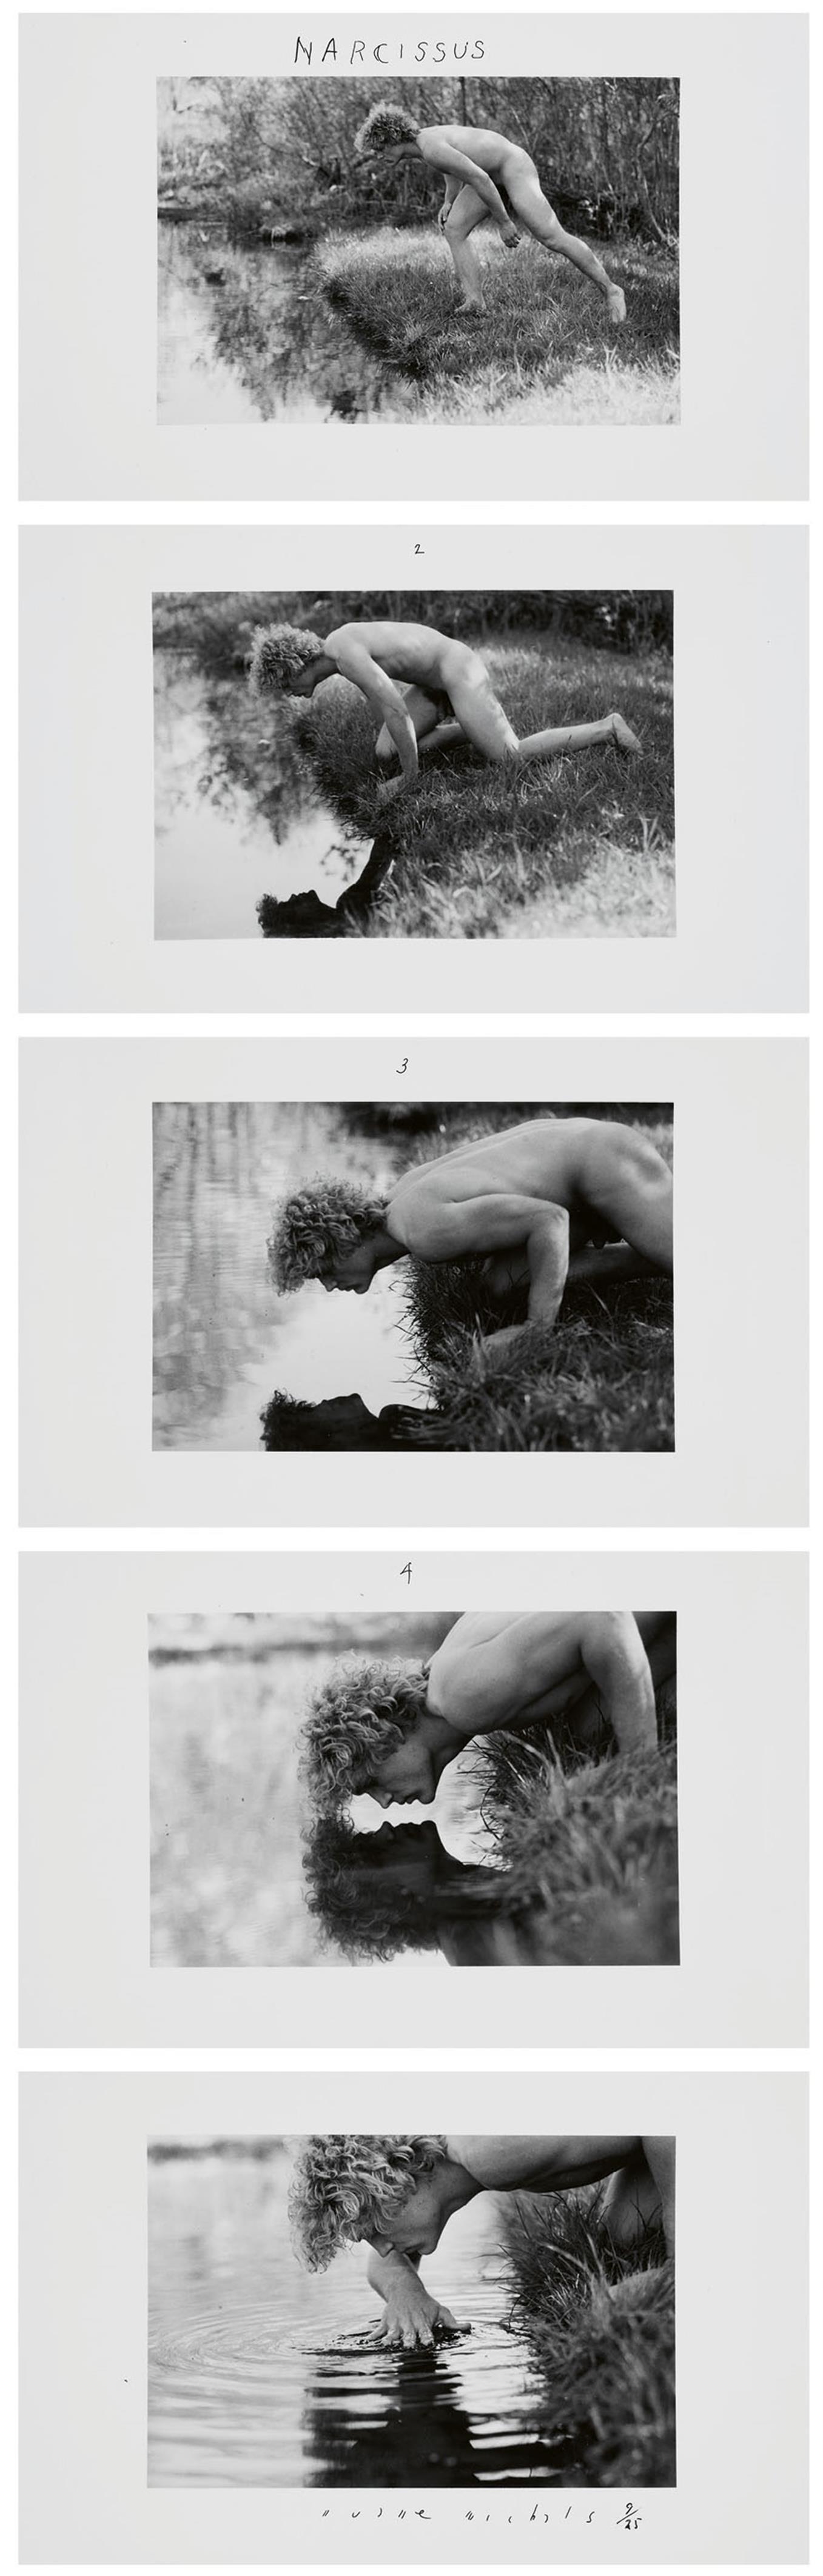 Duane Michals - Narcissus - image-11